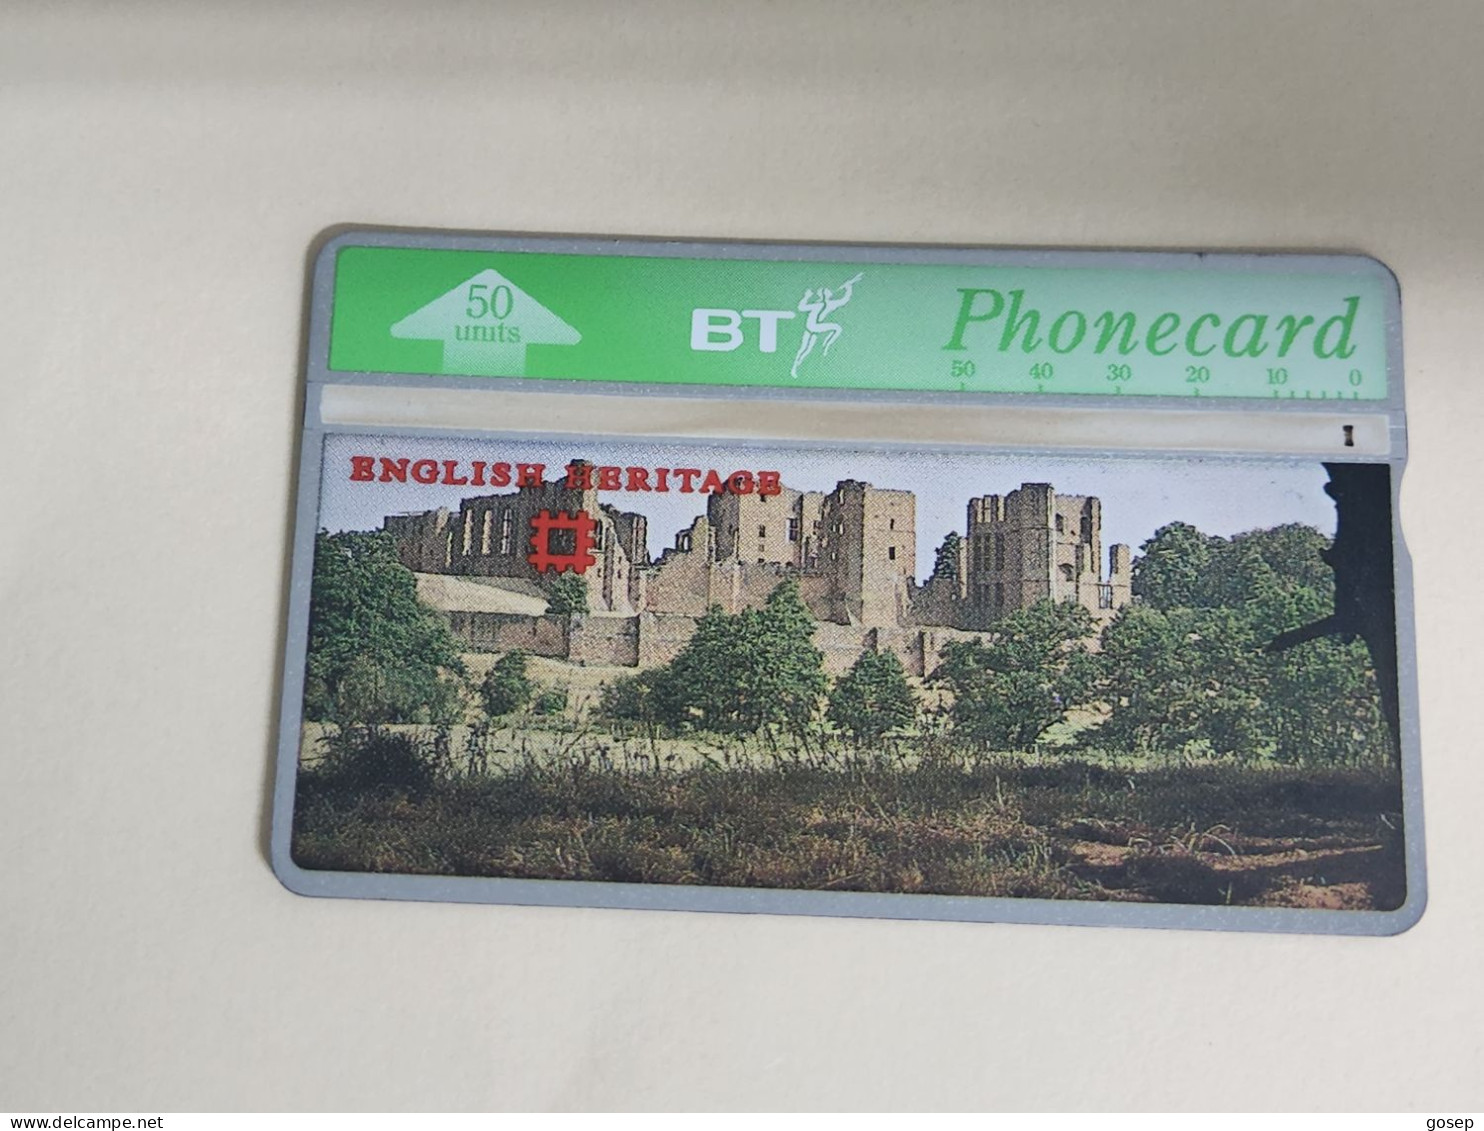 United Kingdom-(BTA108)-HERITAGE-Kenilworth Castle-(182)(50units)(528D70525)price Cataloge3.00£-used+1card Prepiad Free - BT Publicitaire Uitgaven